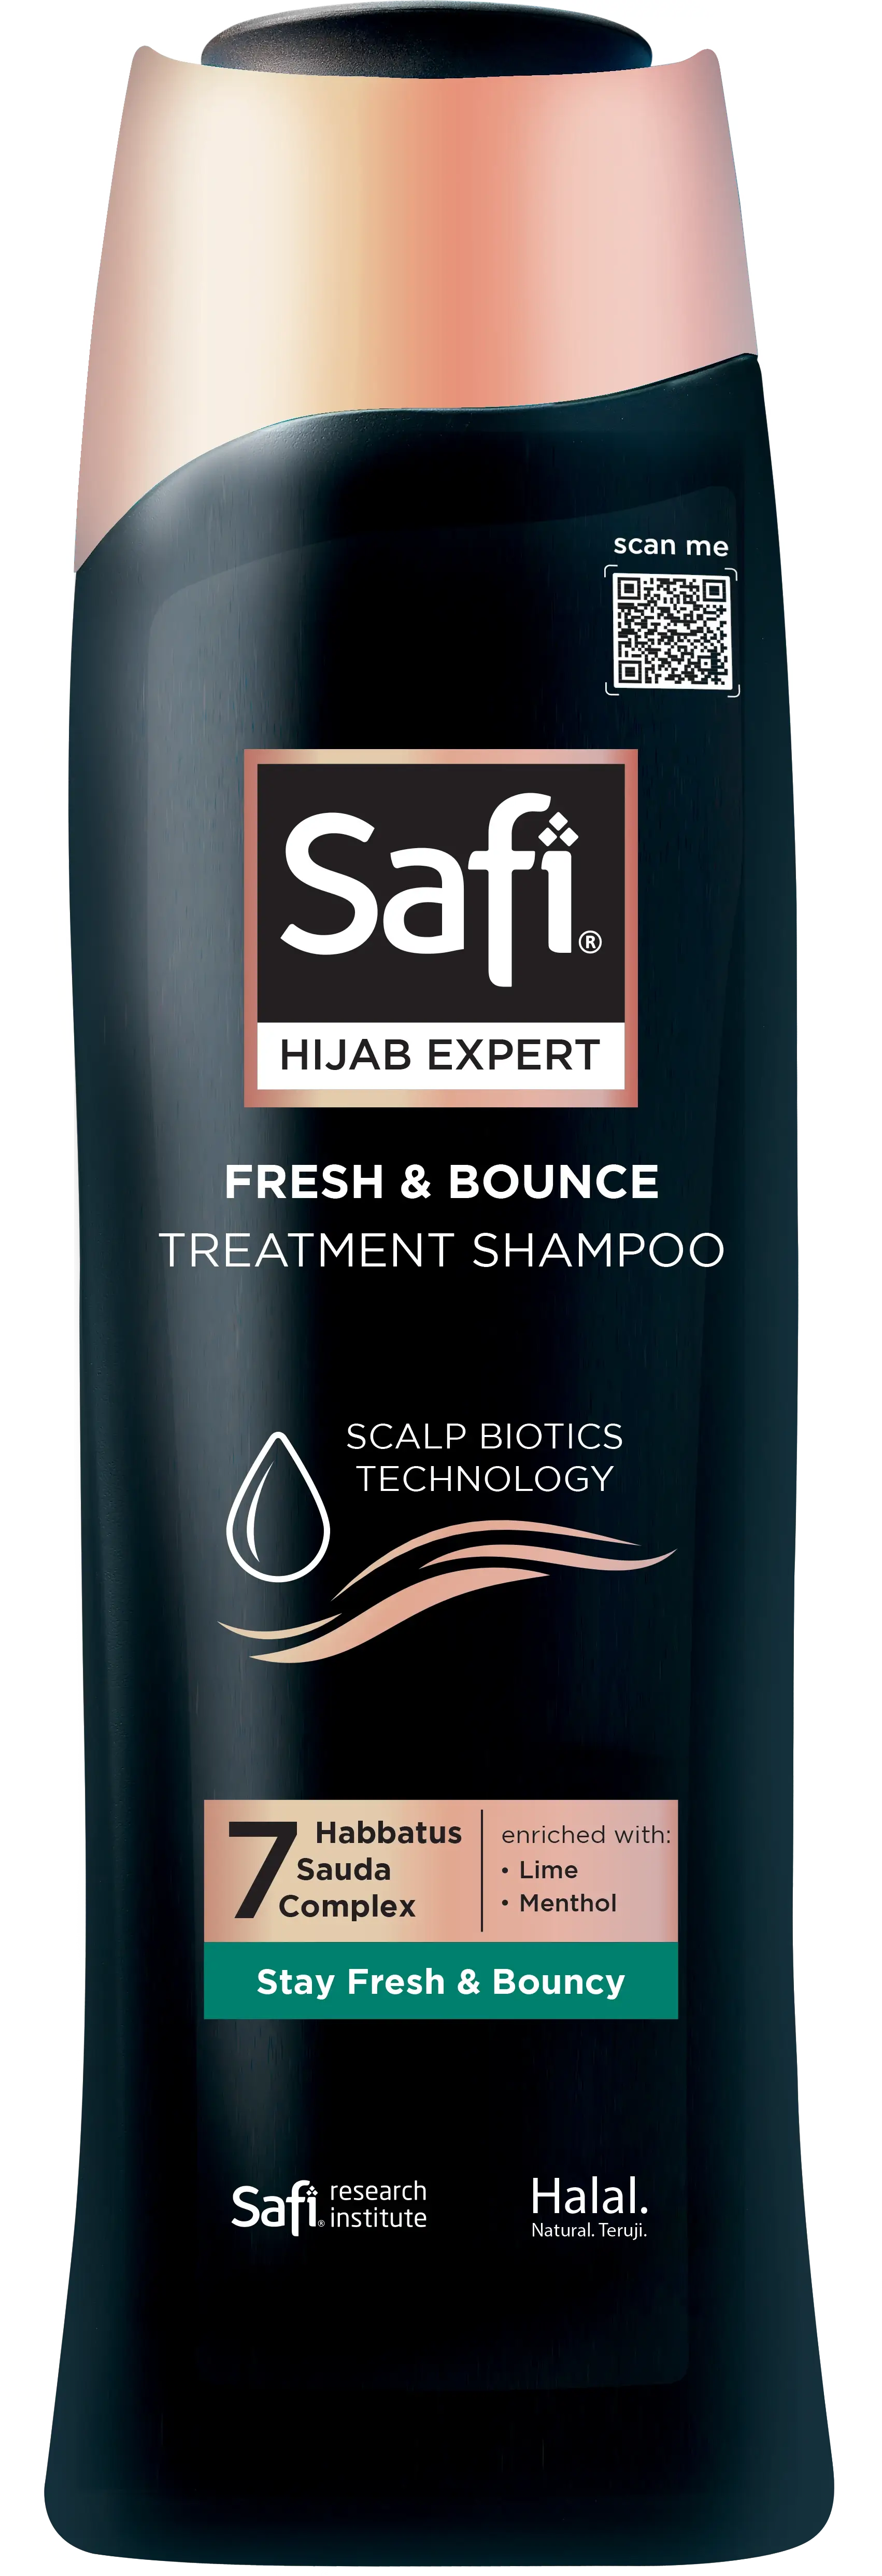 Safi Hijab Expert Fresh & Bounce Treatment Shampoo